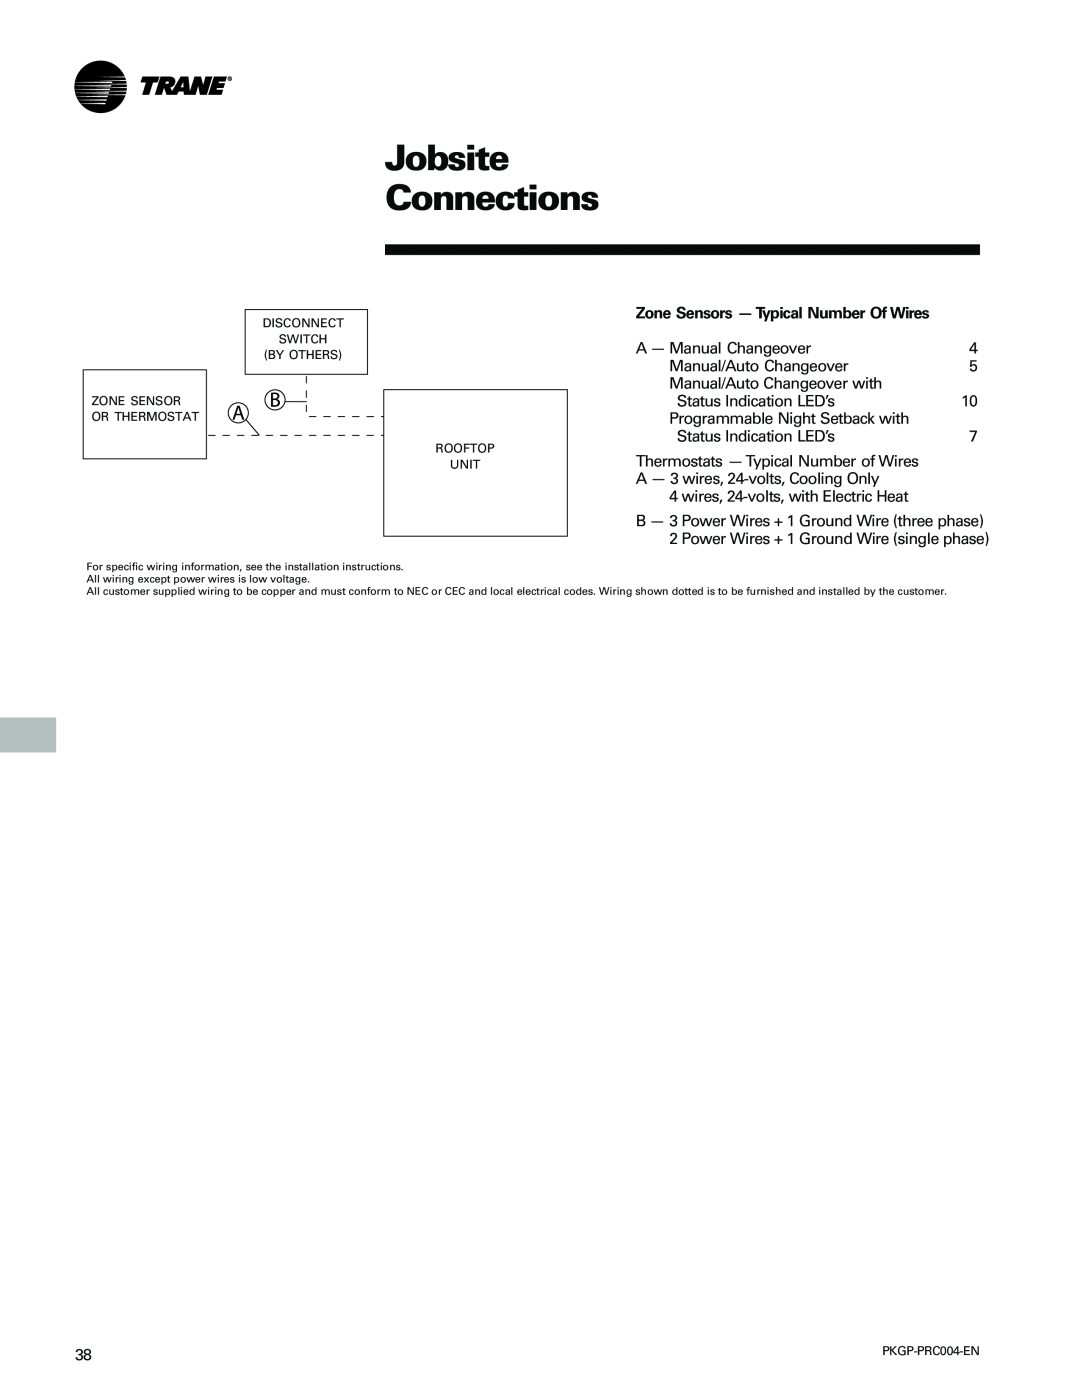 Trane WSC060-120 manual Jobsite Connections 